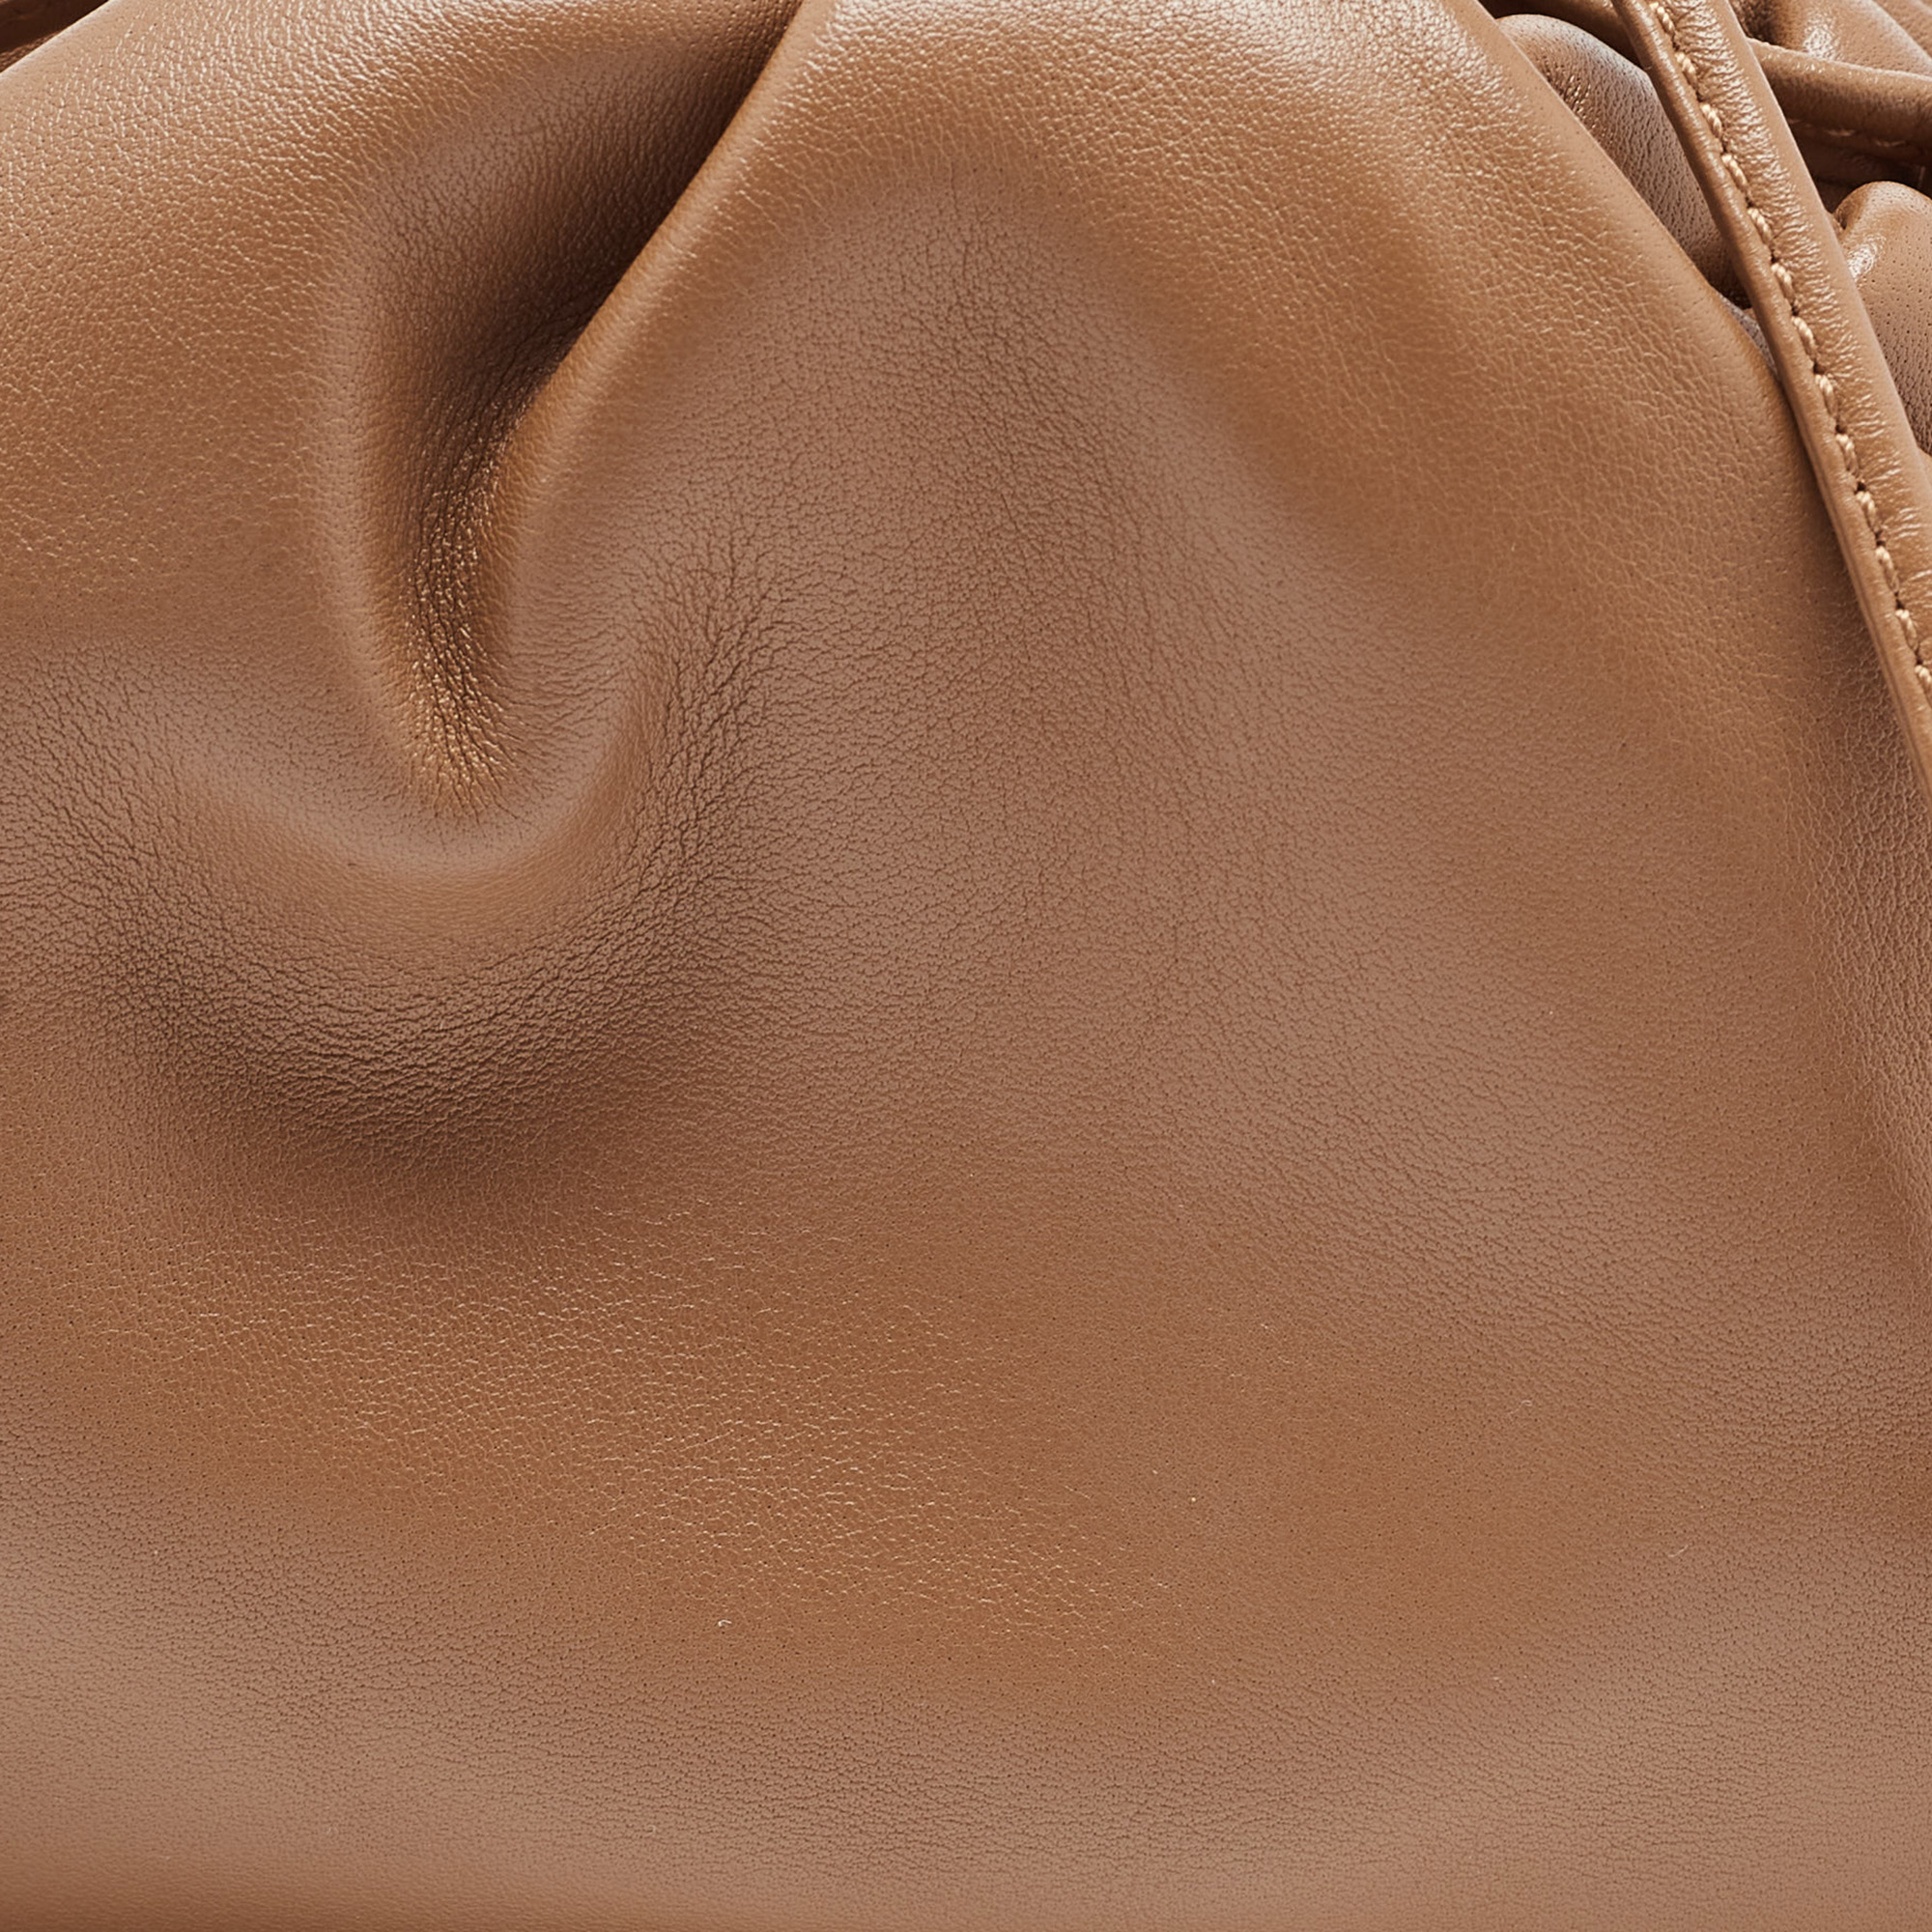 Bottega Veneta Brown Leather Mini The Pouch Bag